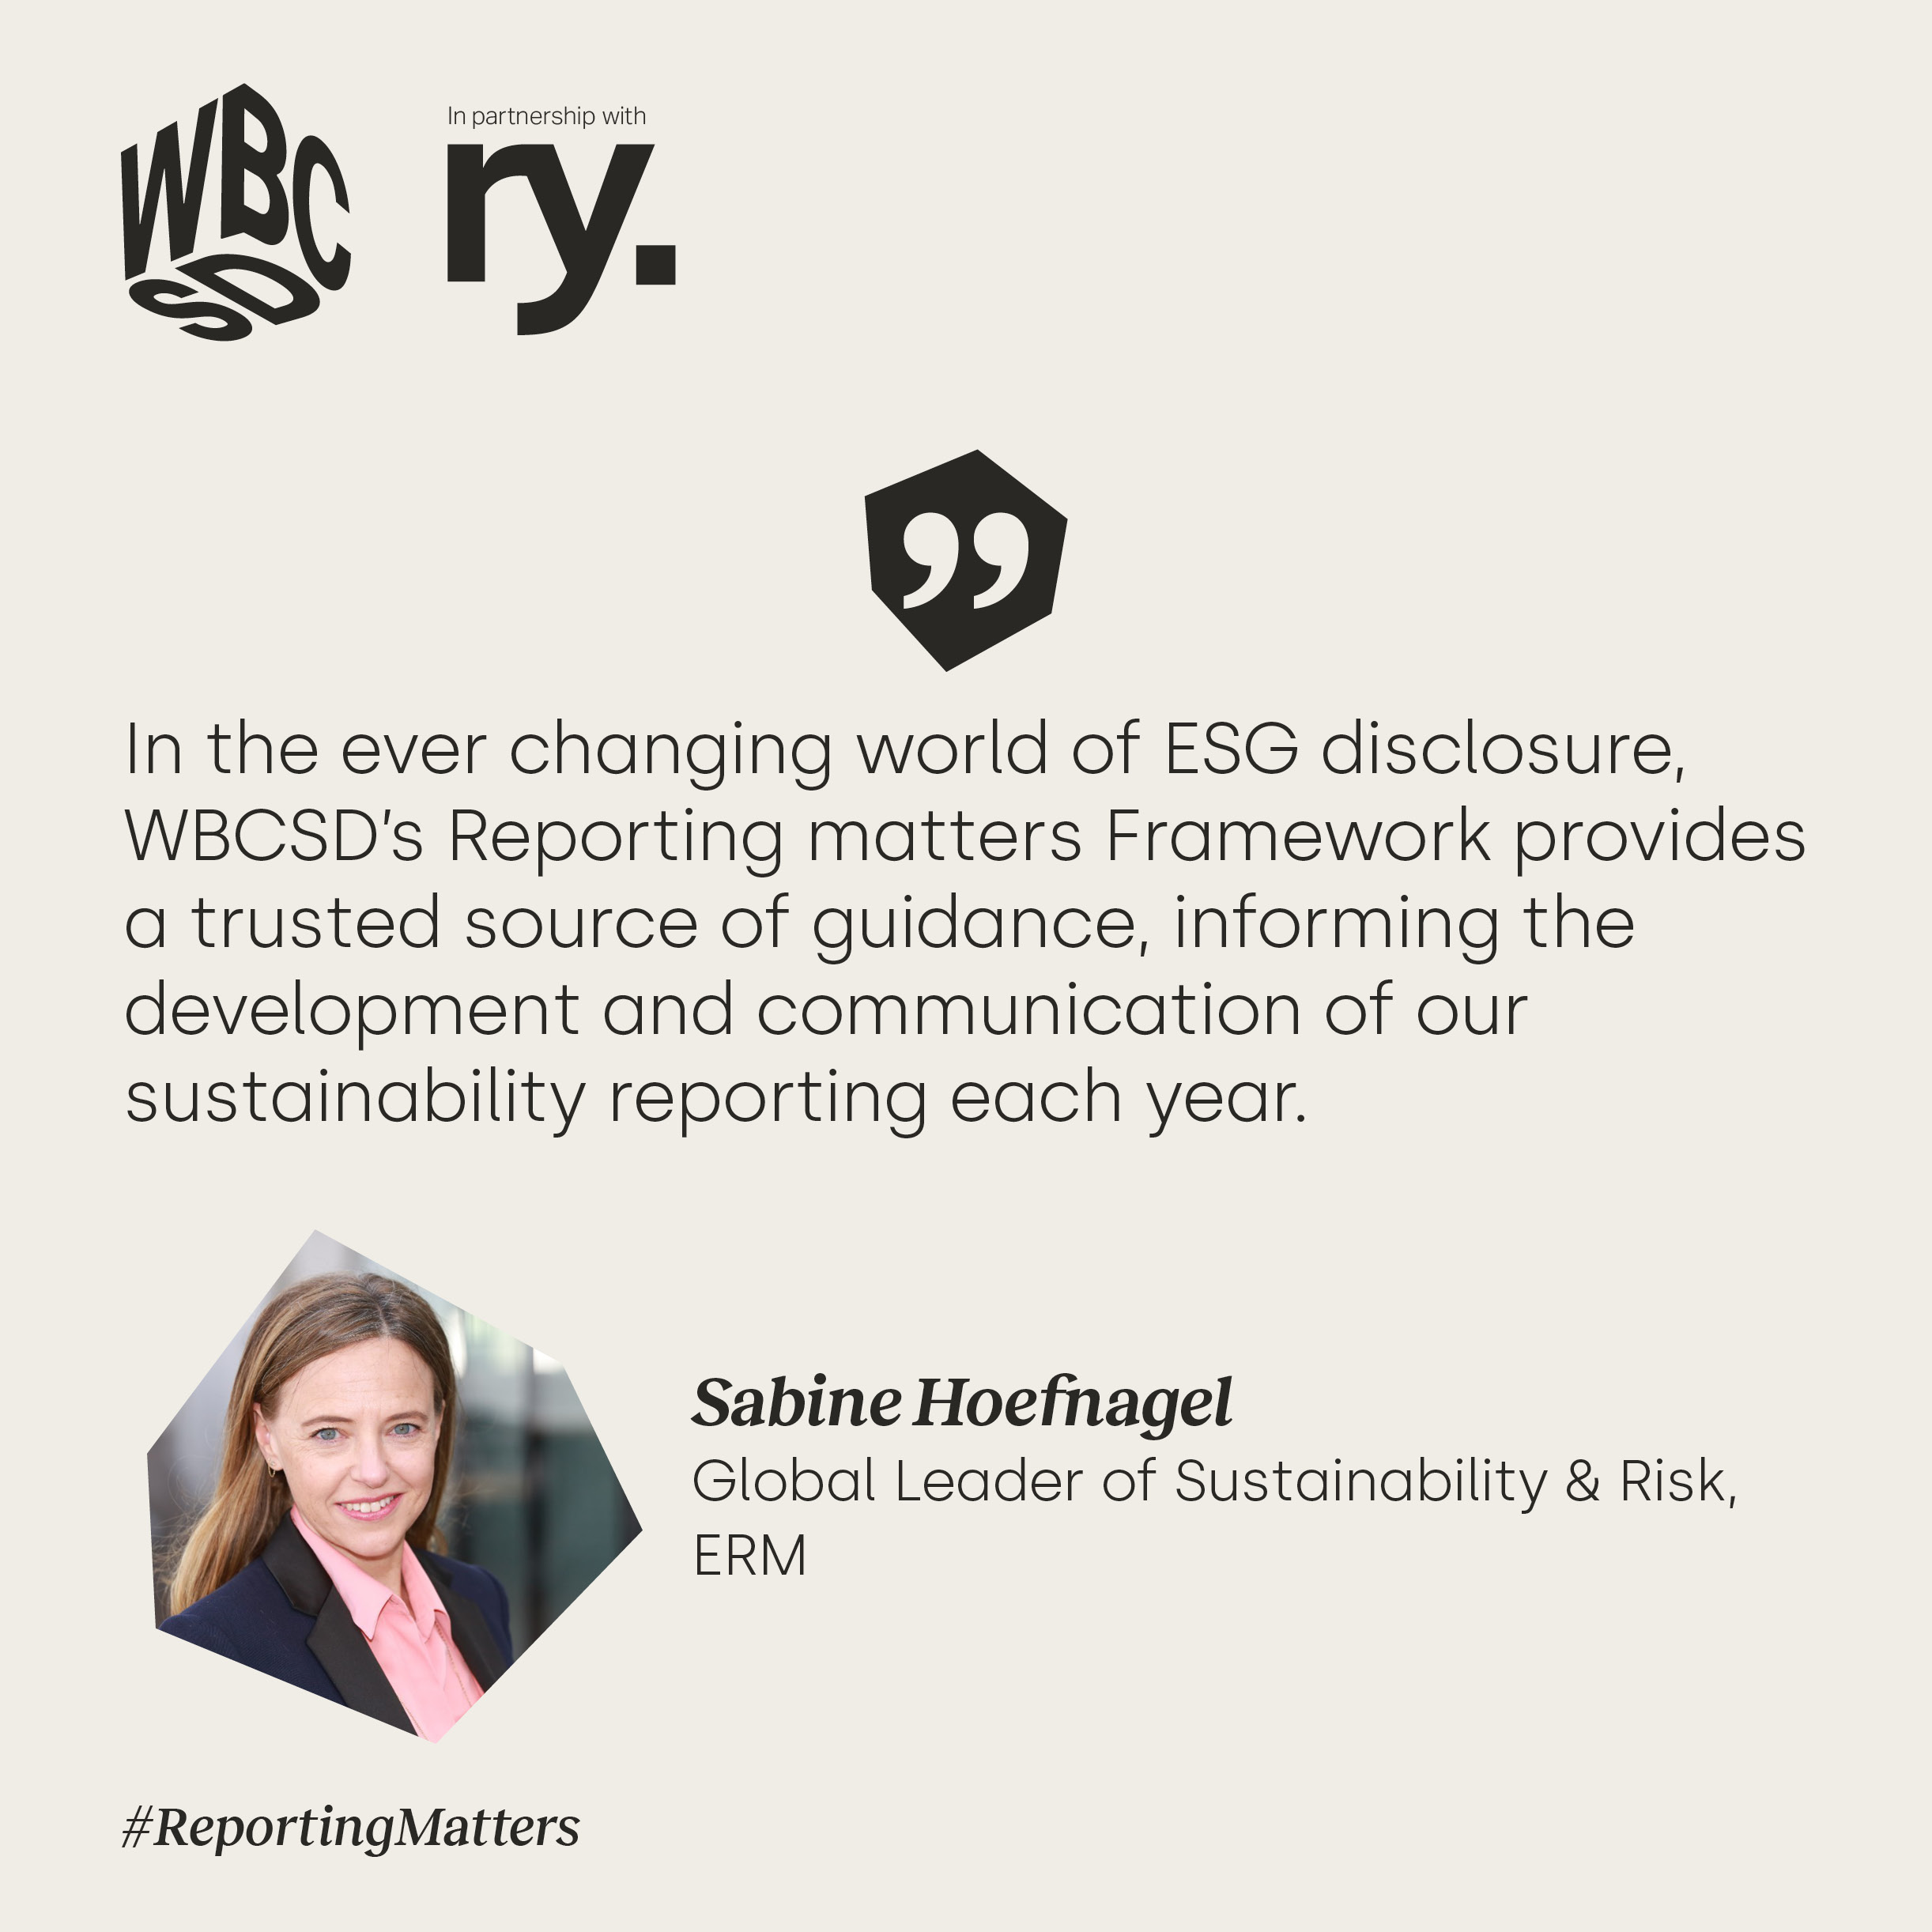 Sabine Hoefnagel, Global Leader of Sustainability and Risk at ERM 